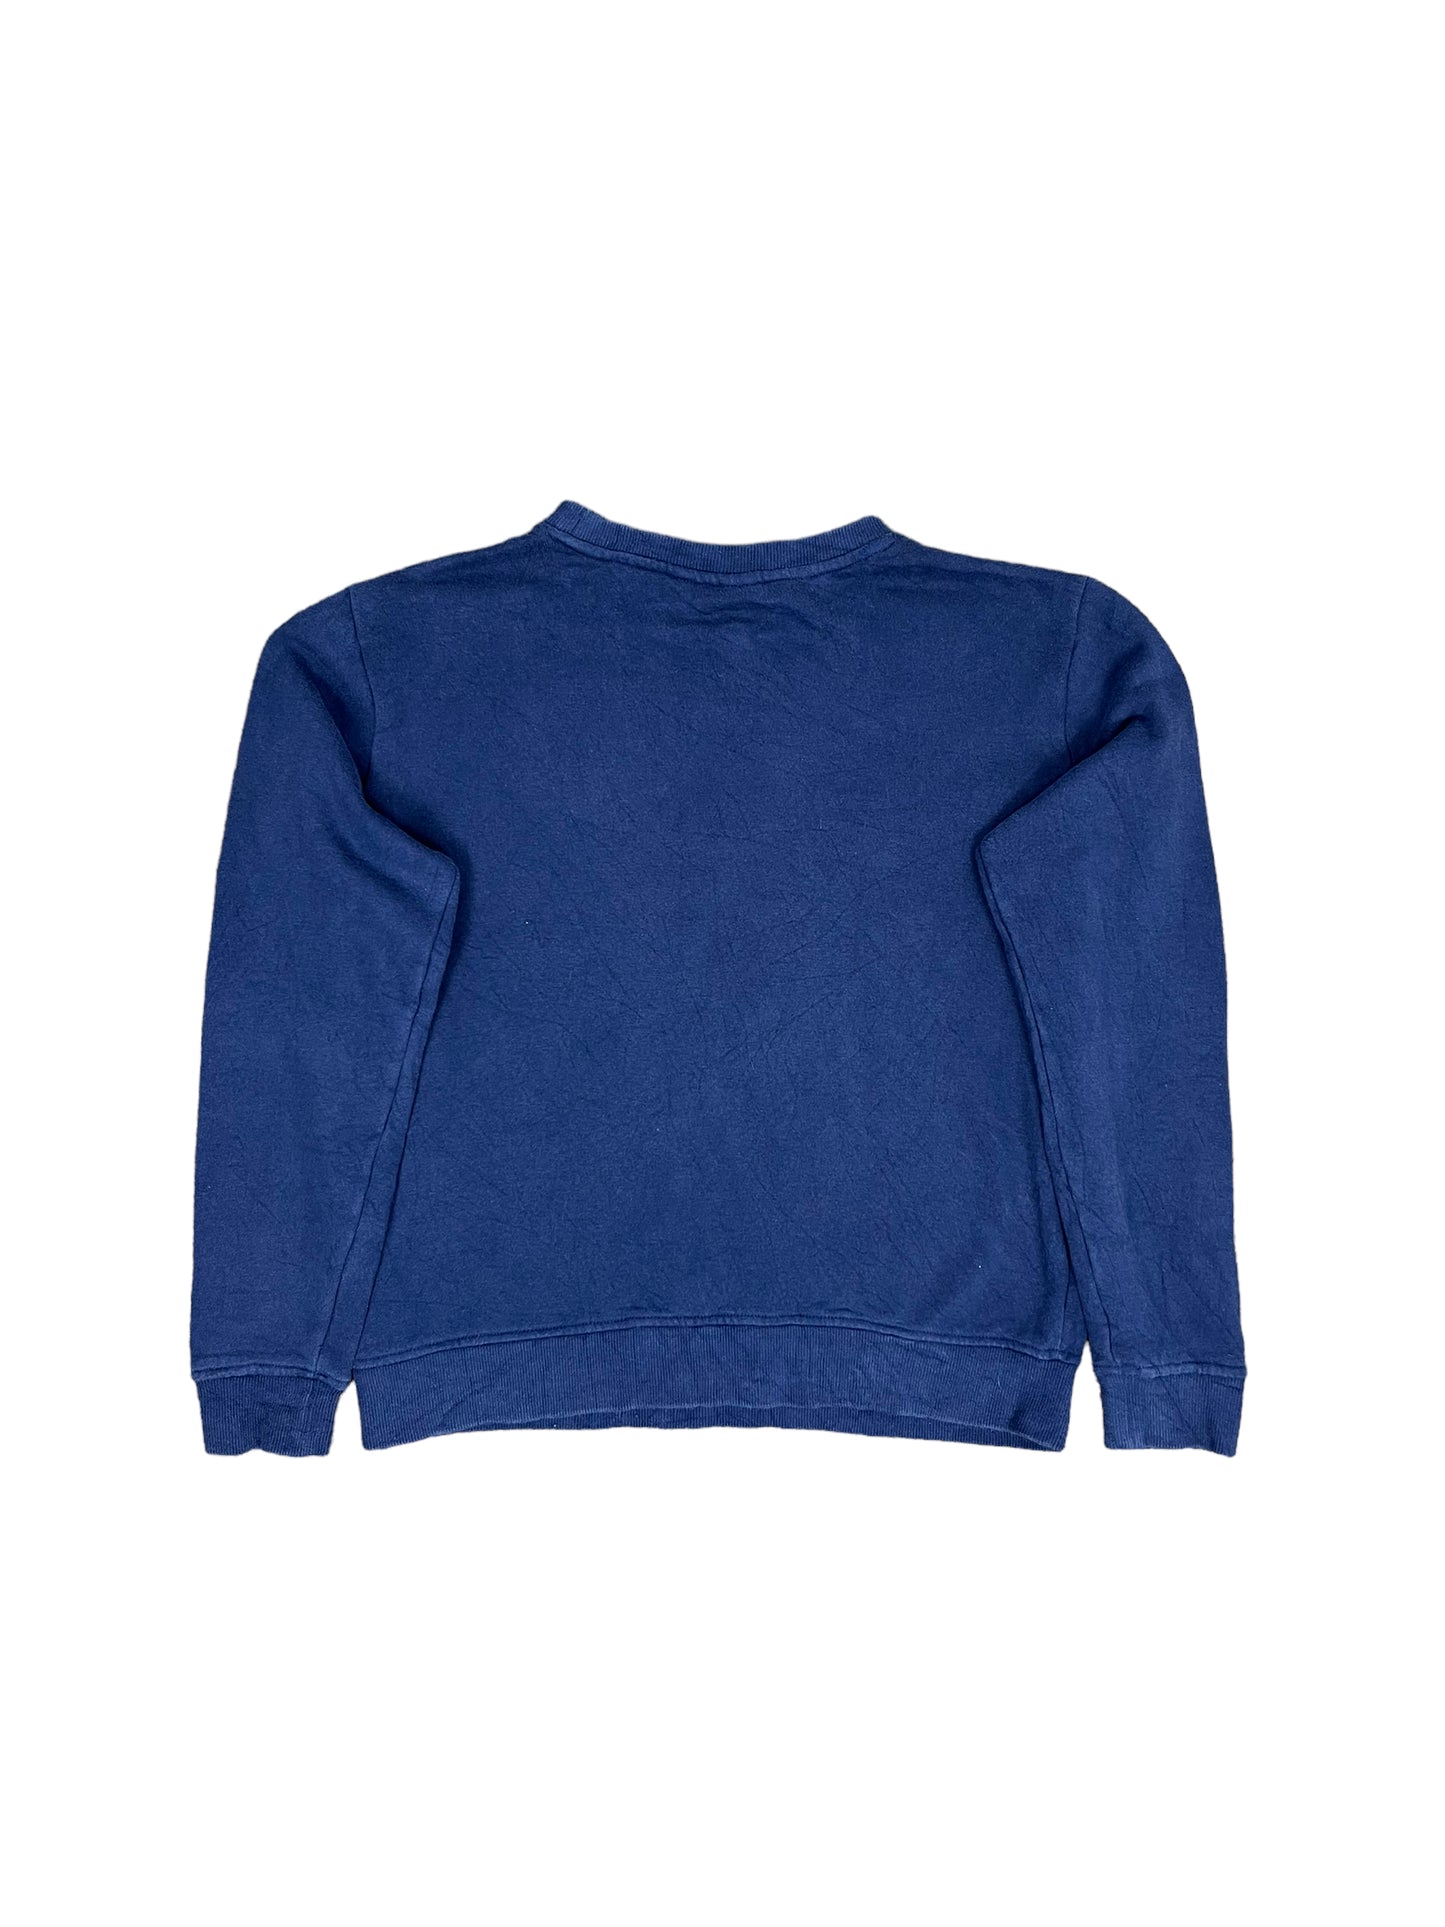 Vintage 90’s Fila Sweatshirt - Small